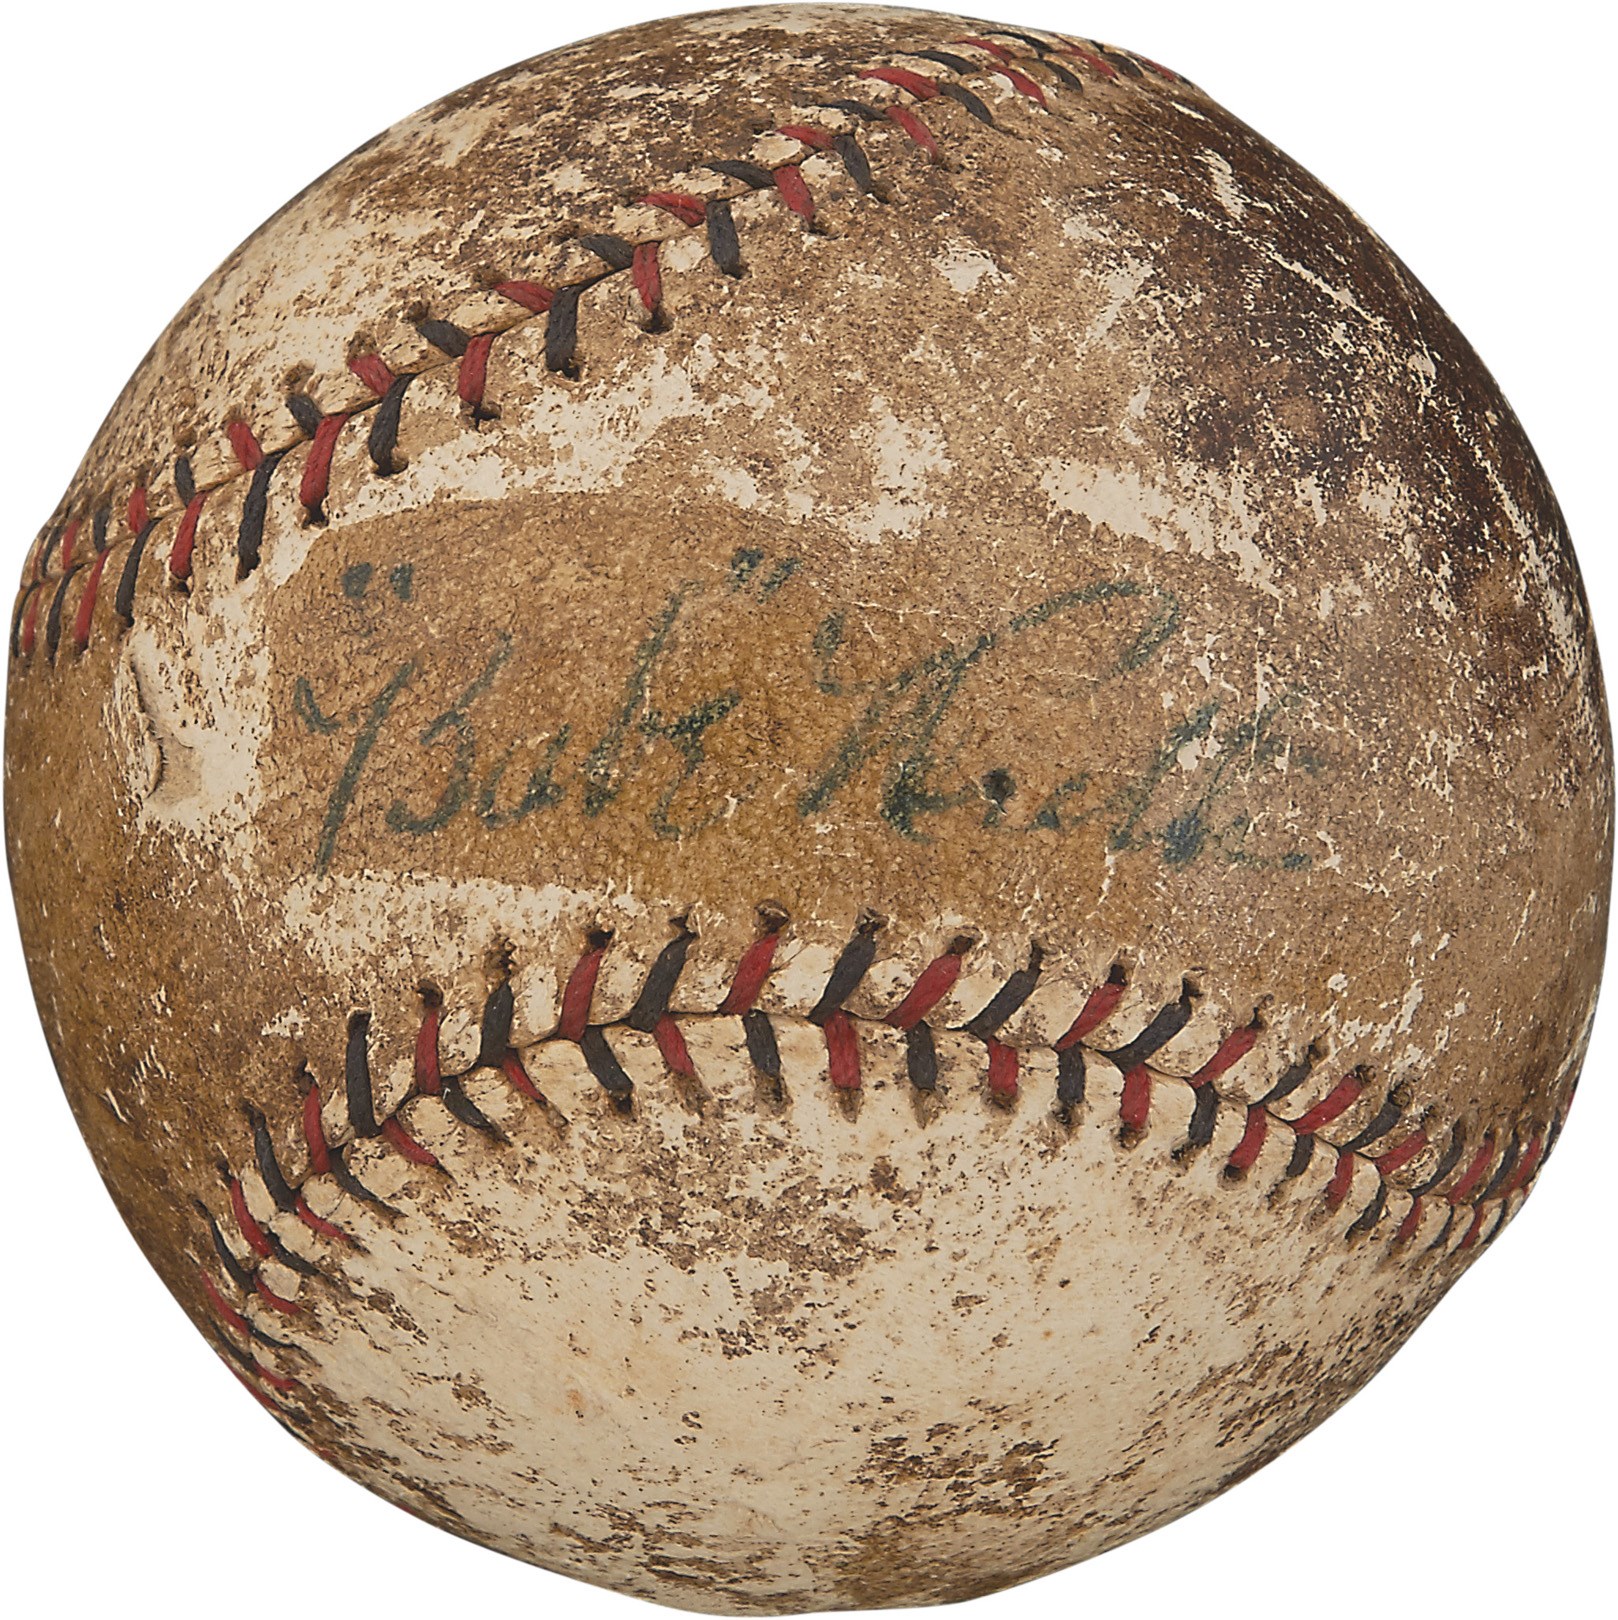 Circa 1920 Babe Ruth Single-Signed Baseball (PSA)